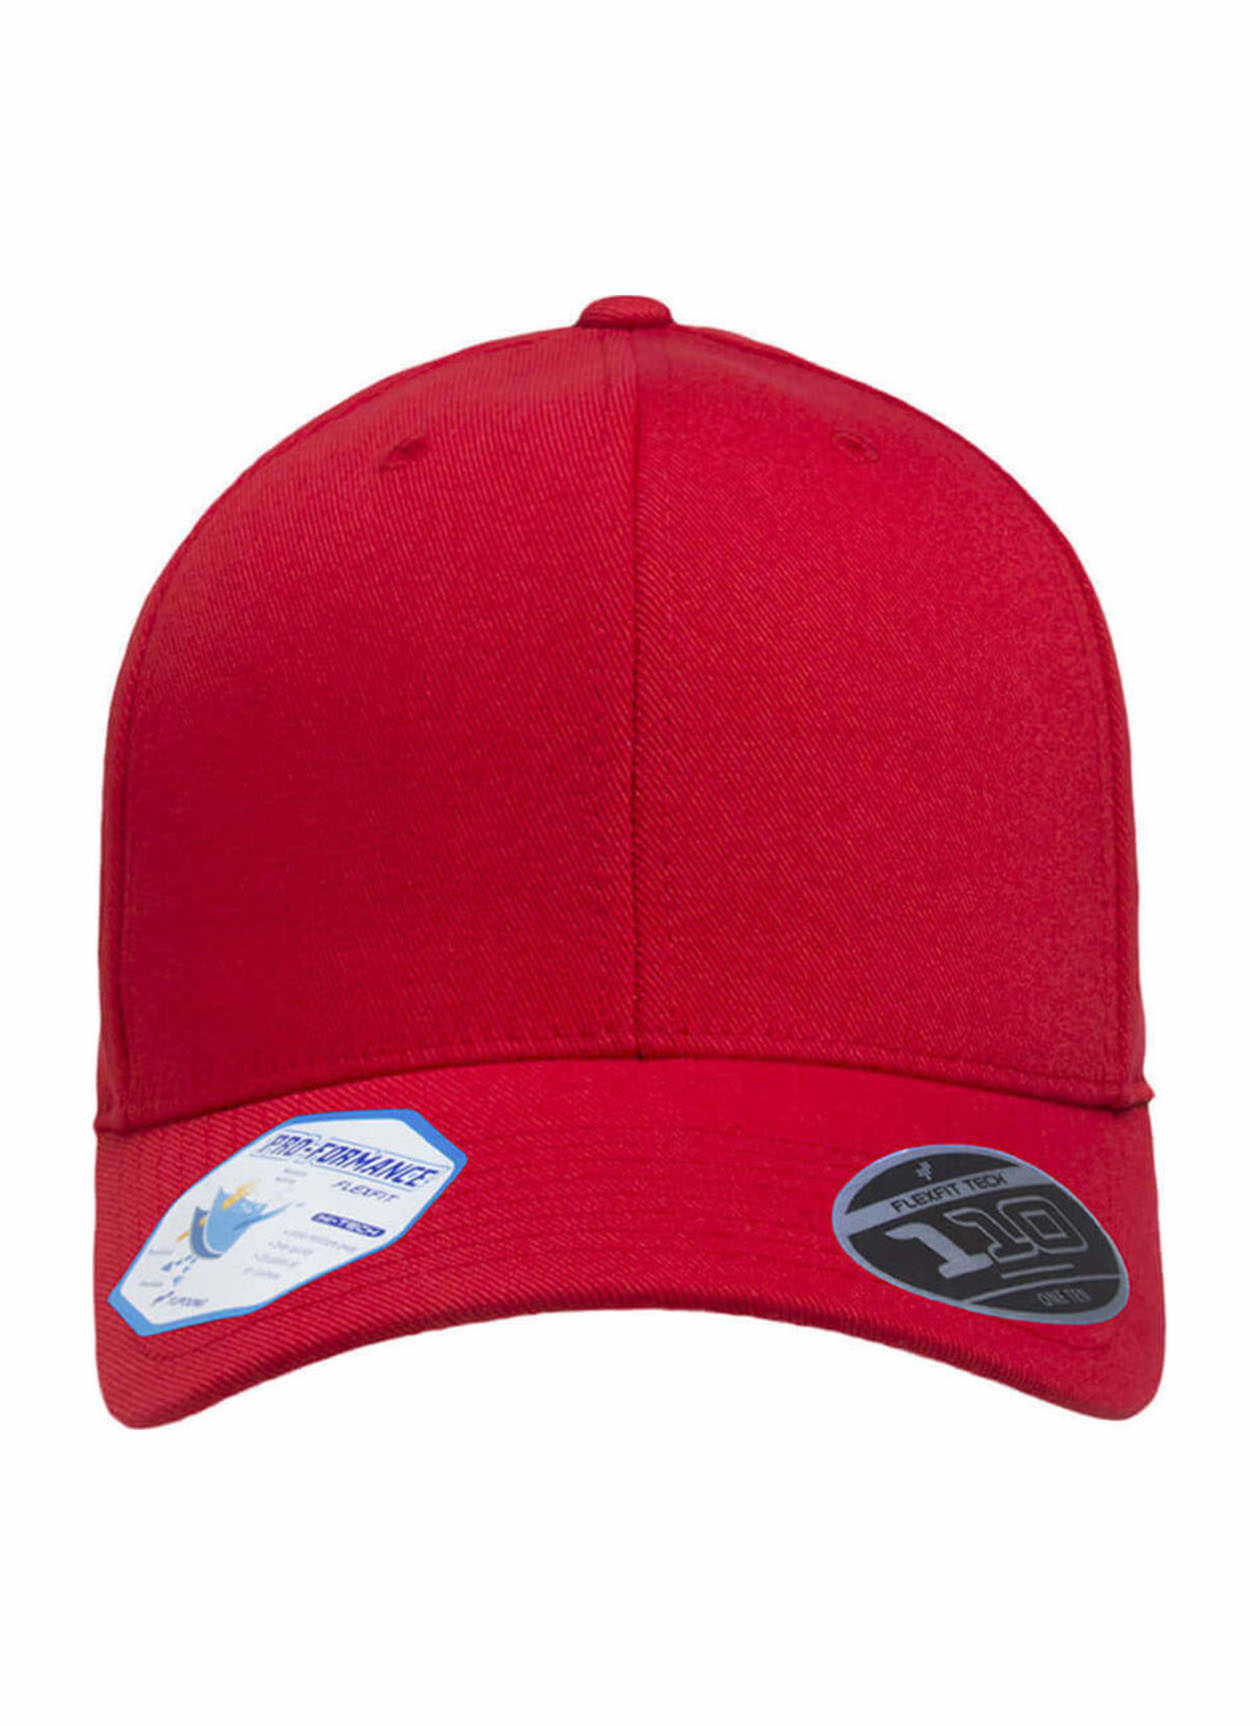 Flexfit Red Pro-Formance Solid Hat